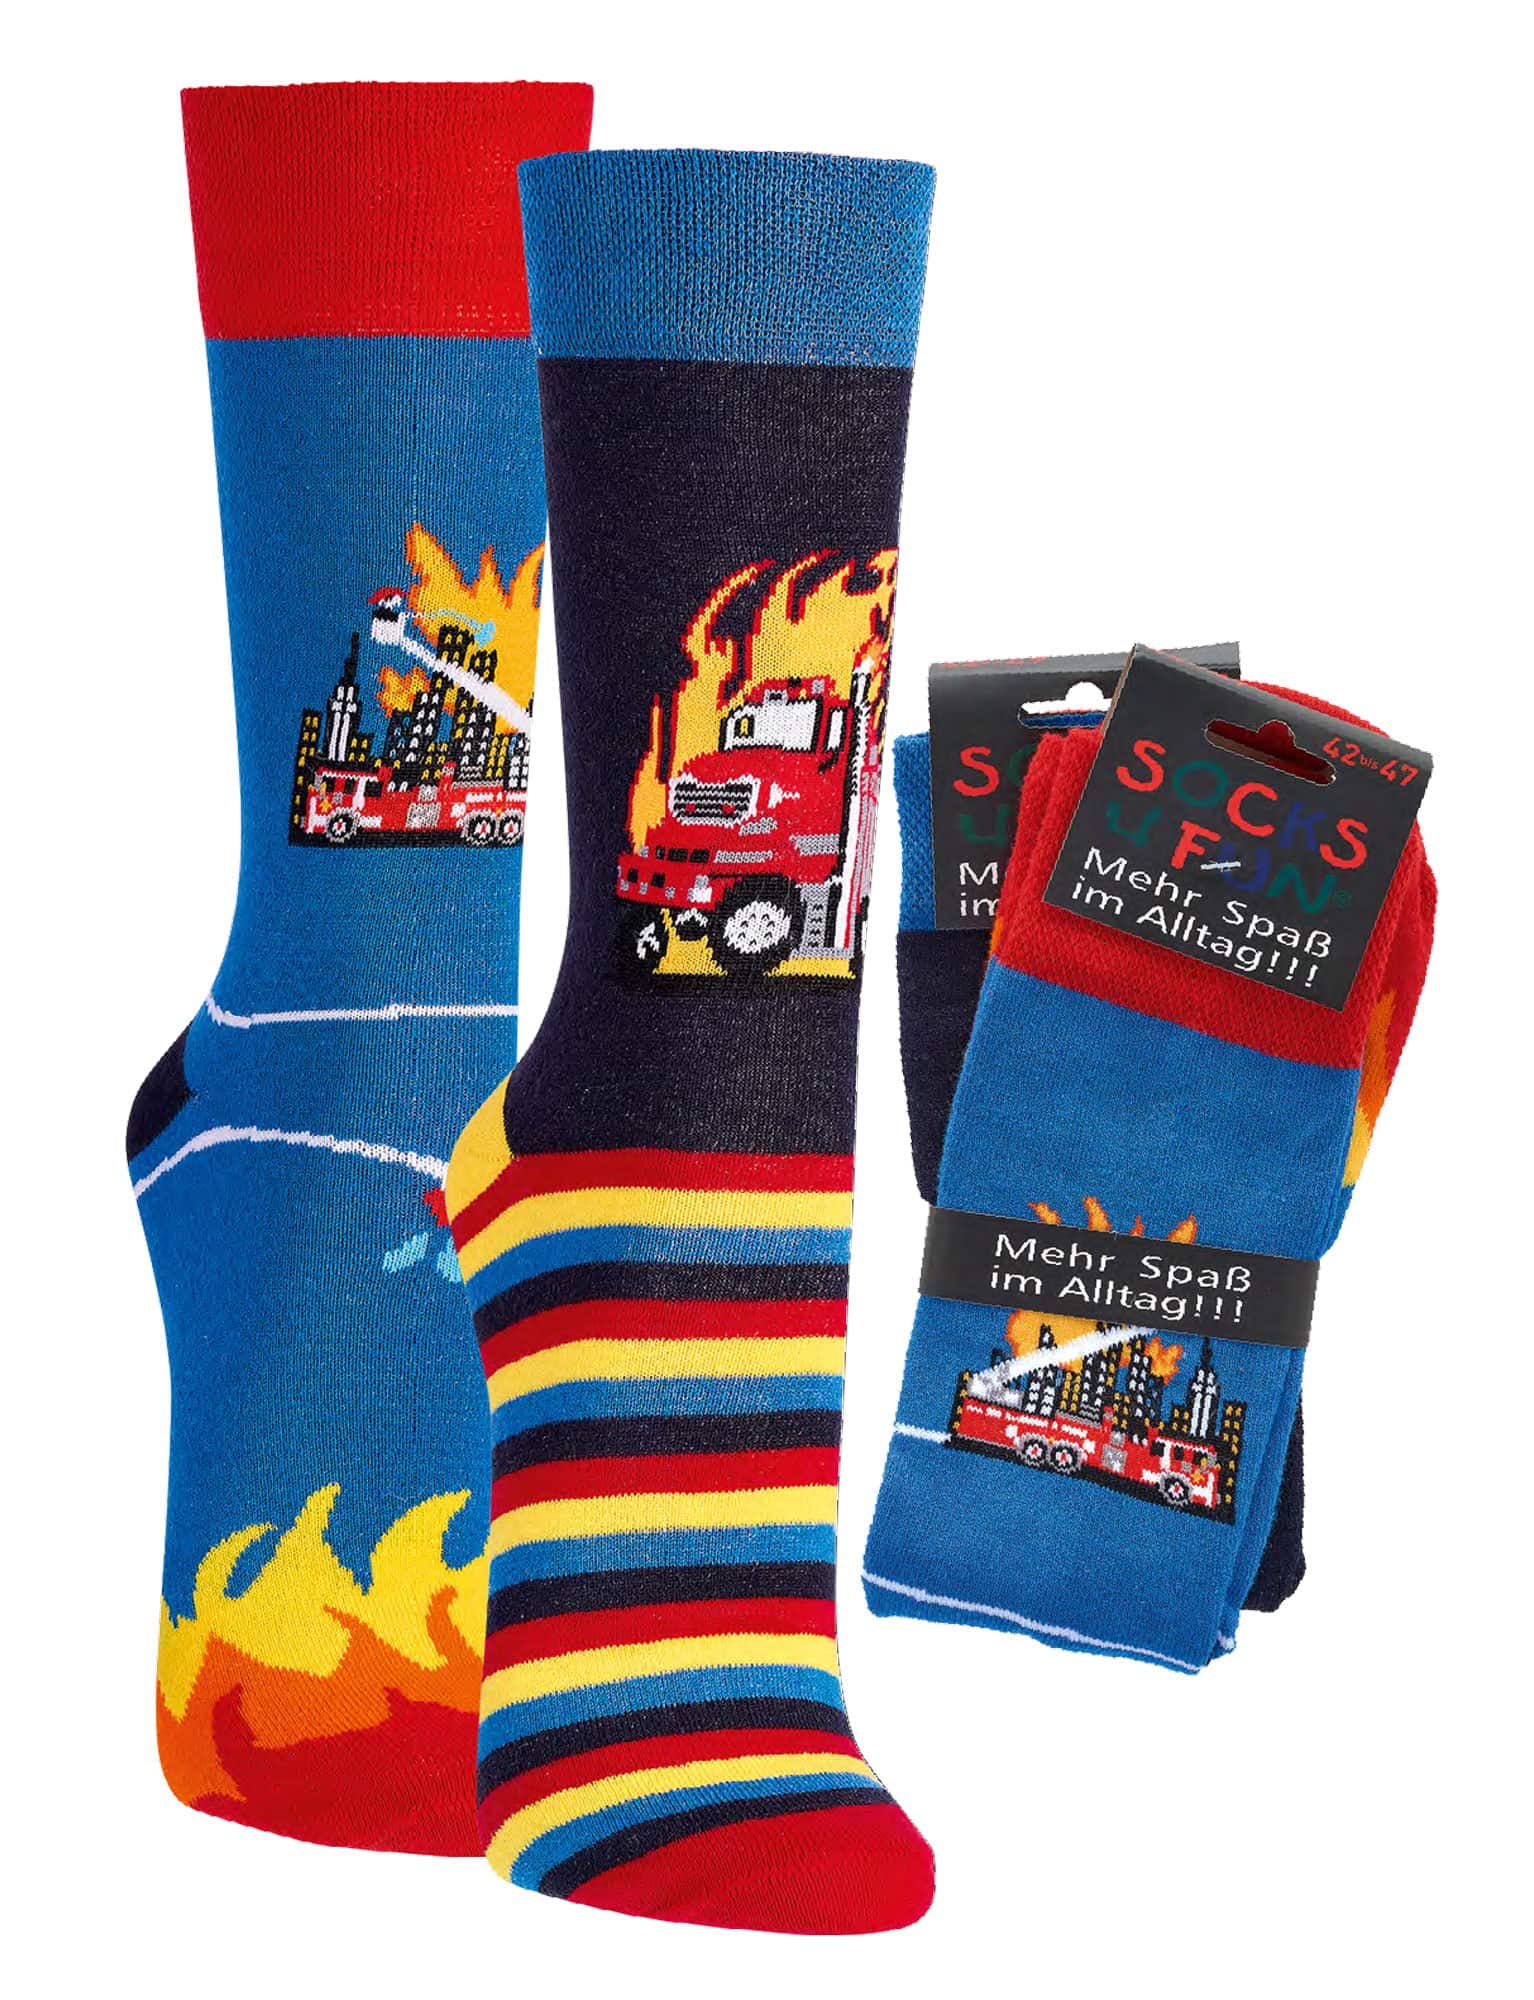 Bunte Socken-Feuerwehr  als Geschenkidee oder zum Selbertragen  2 Paar